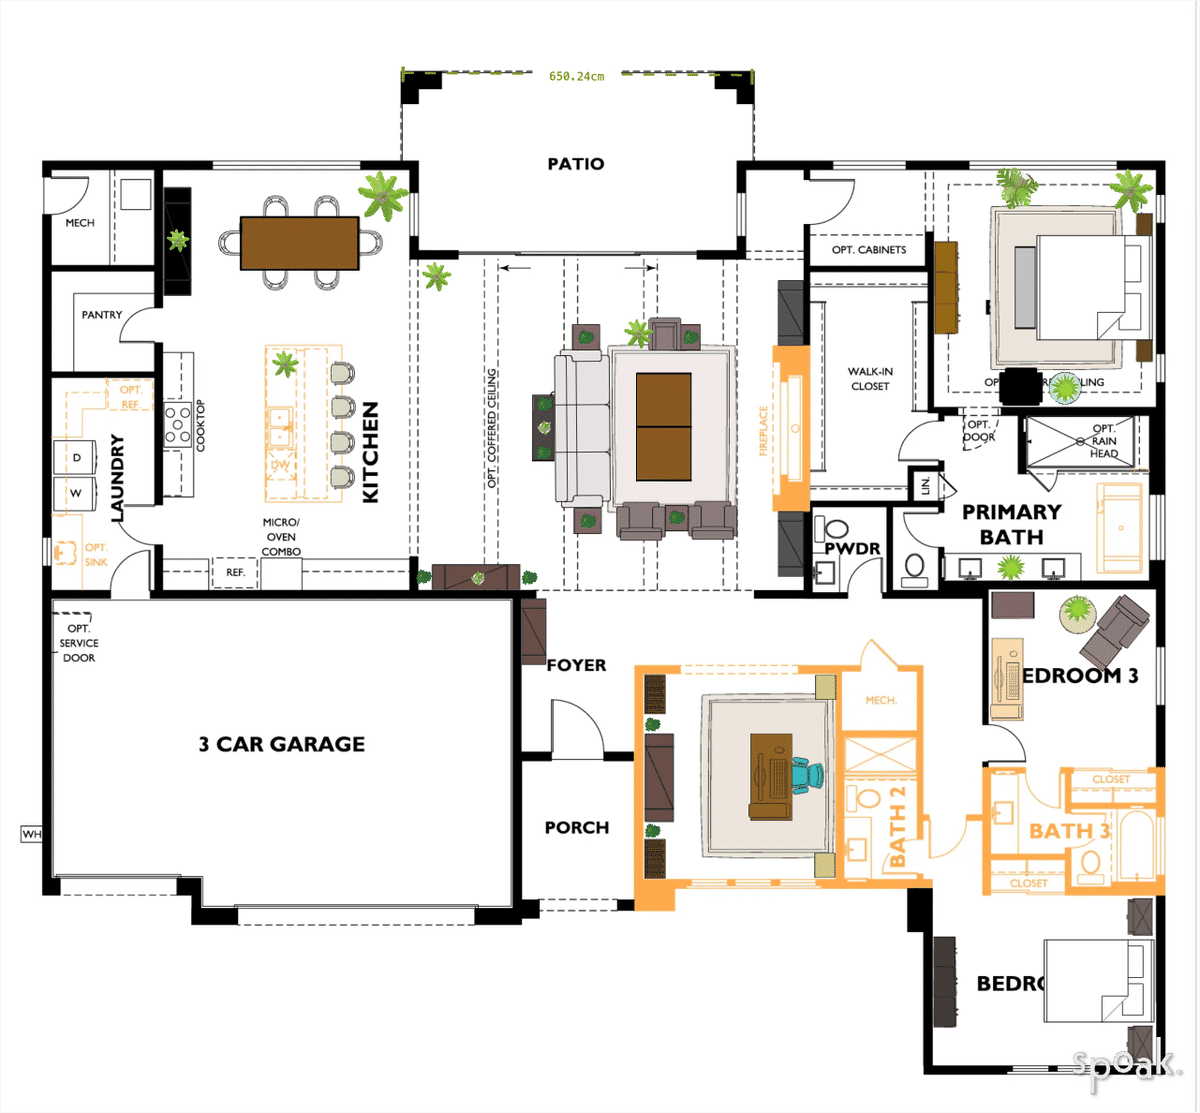 Bedroom Floor Plan designed by Gary Netherton